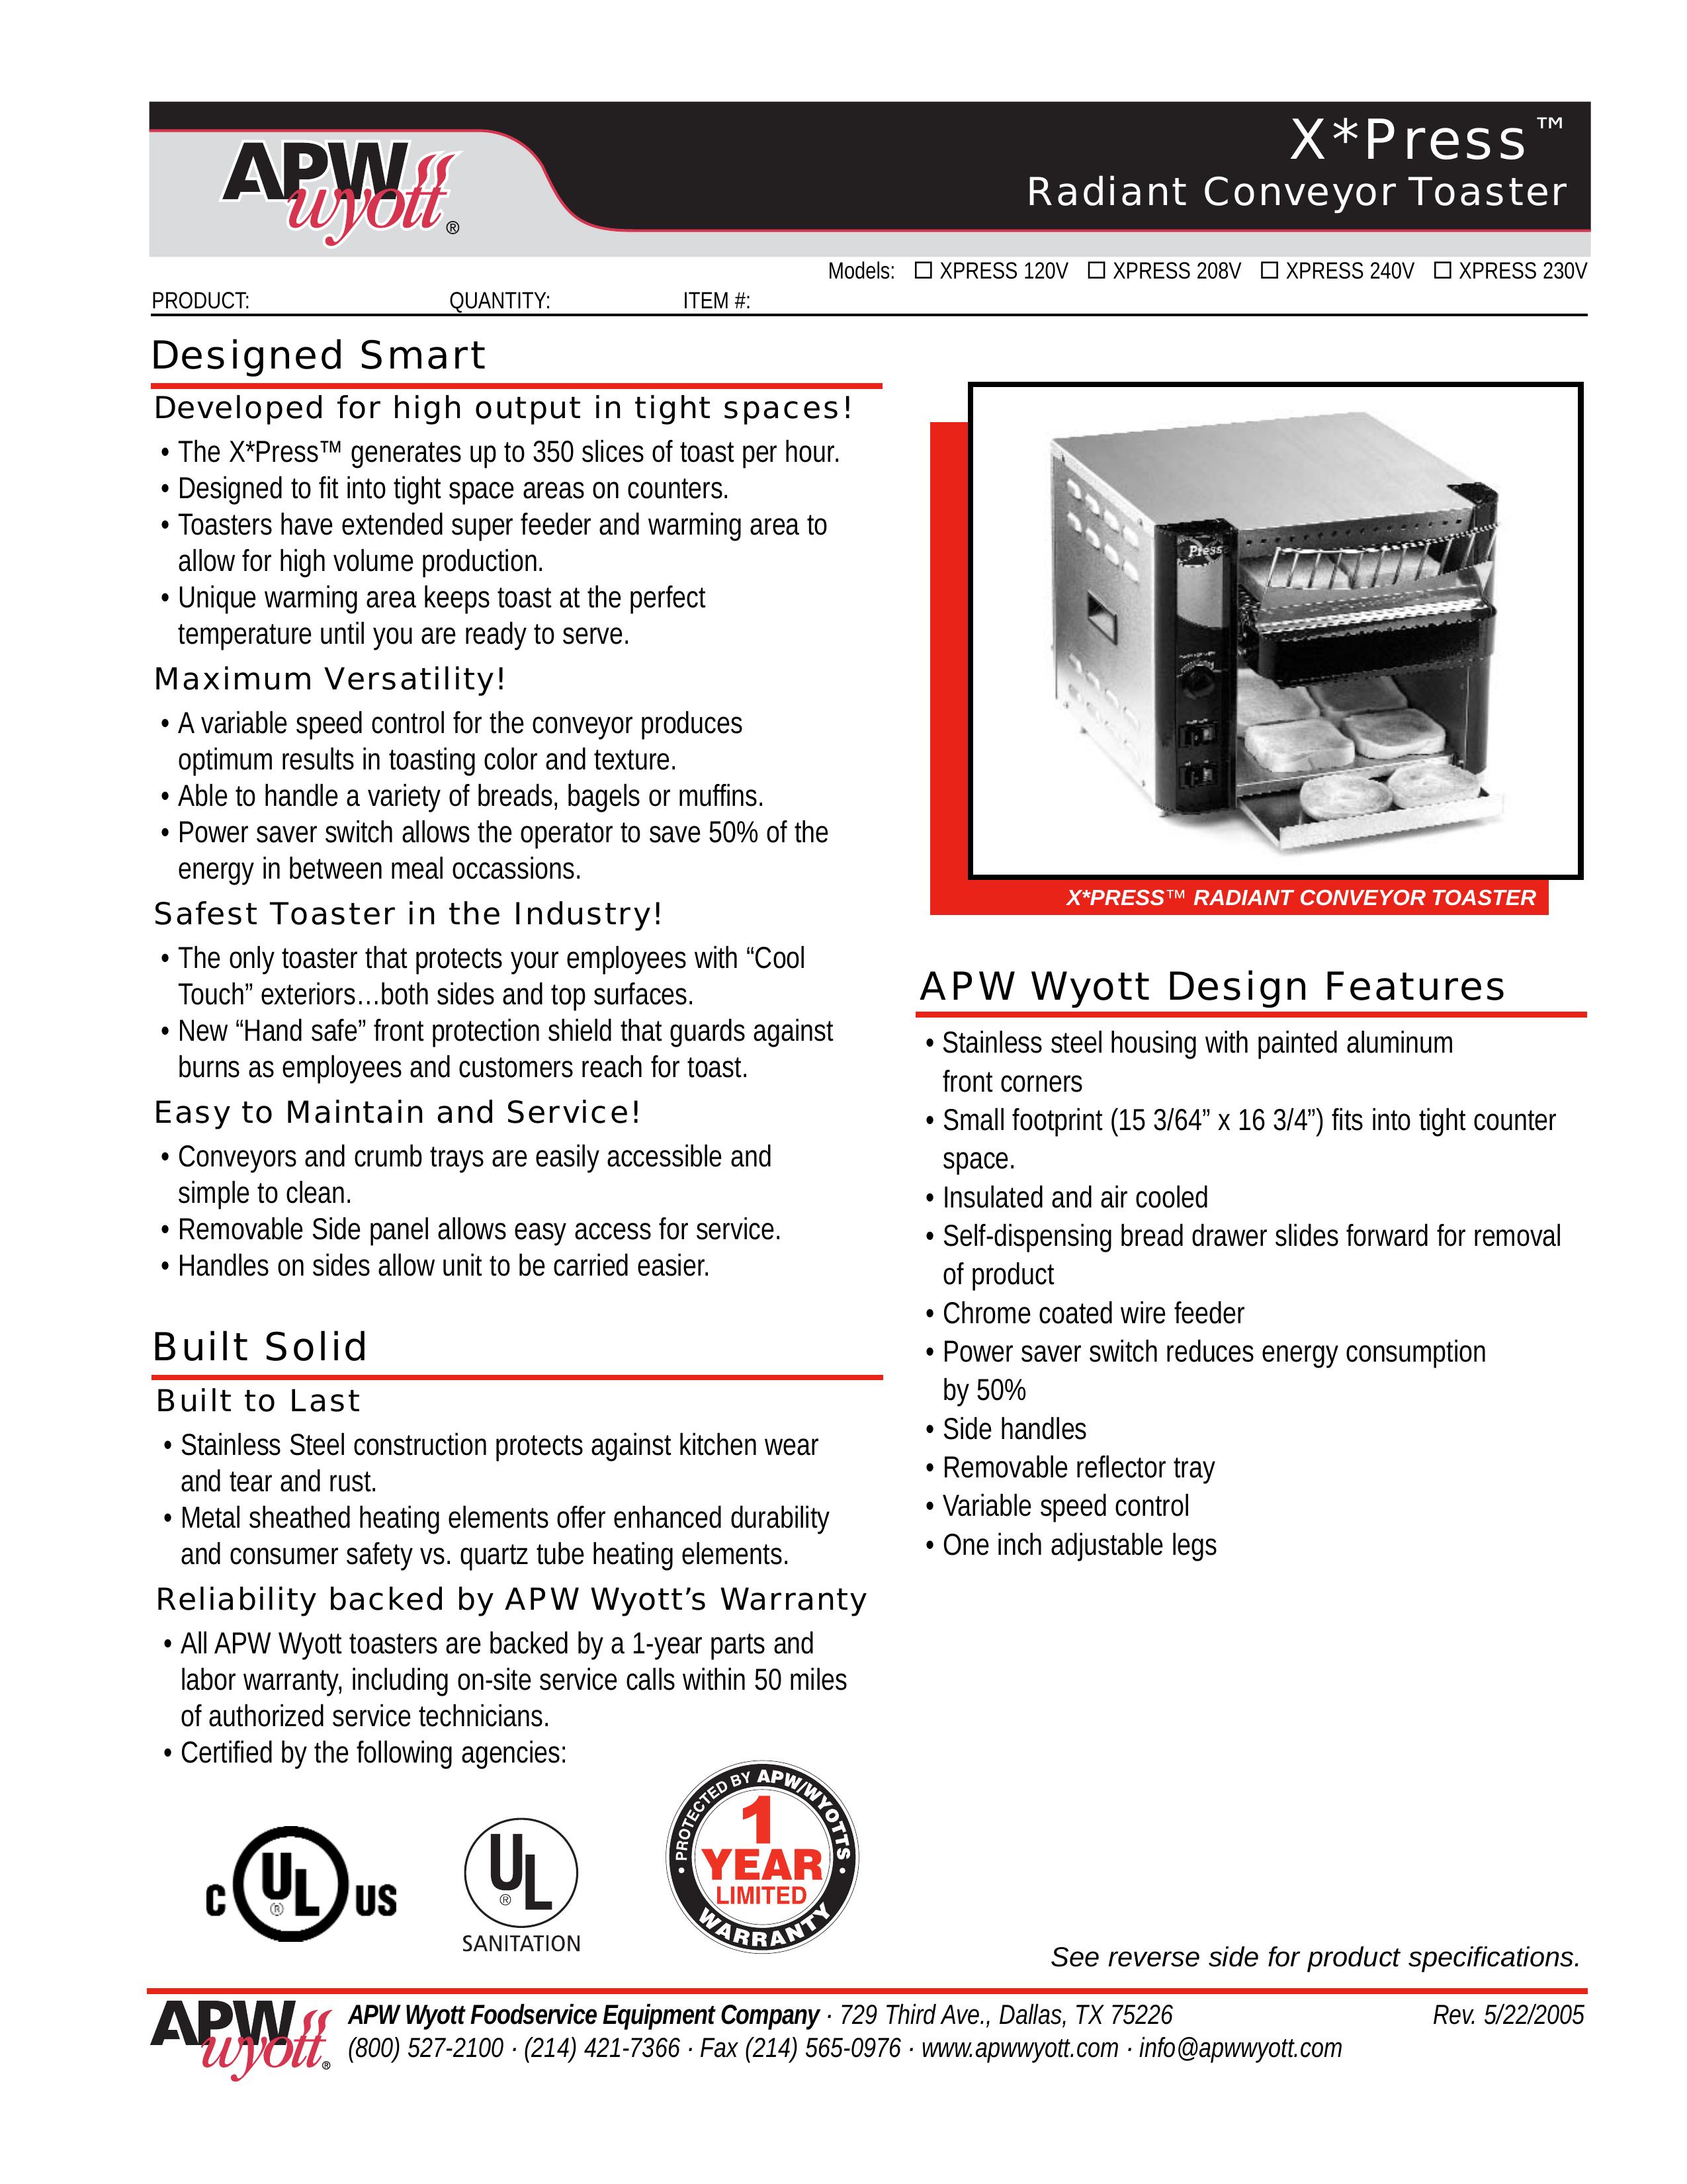 APW Wyott XPRESS 240V Toaster User Manual